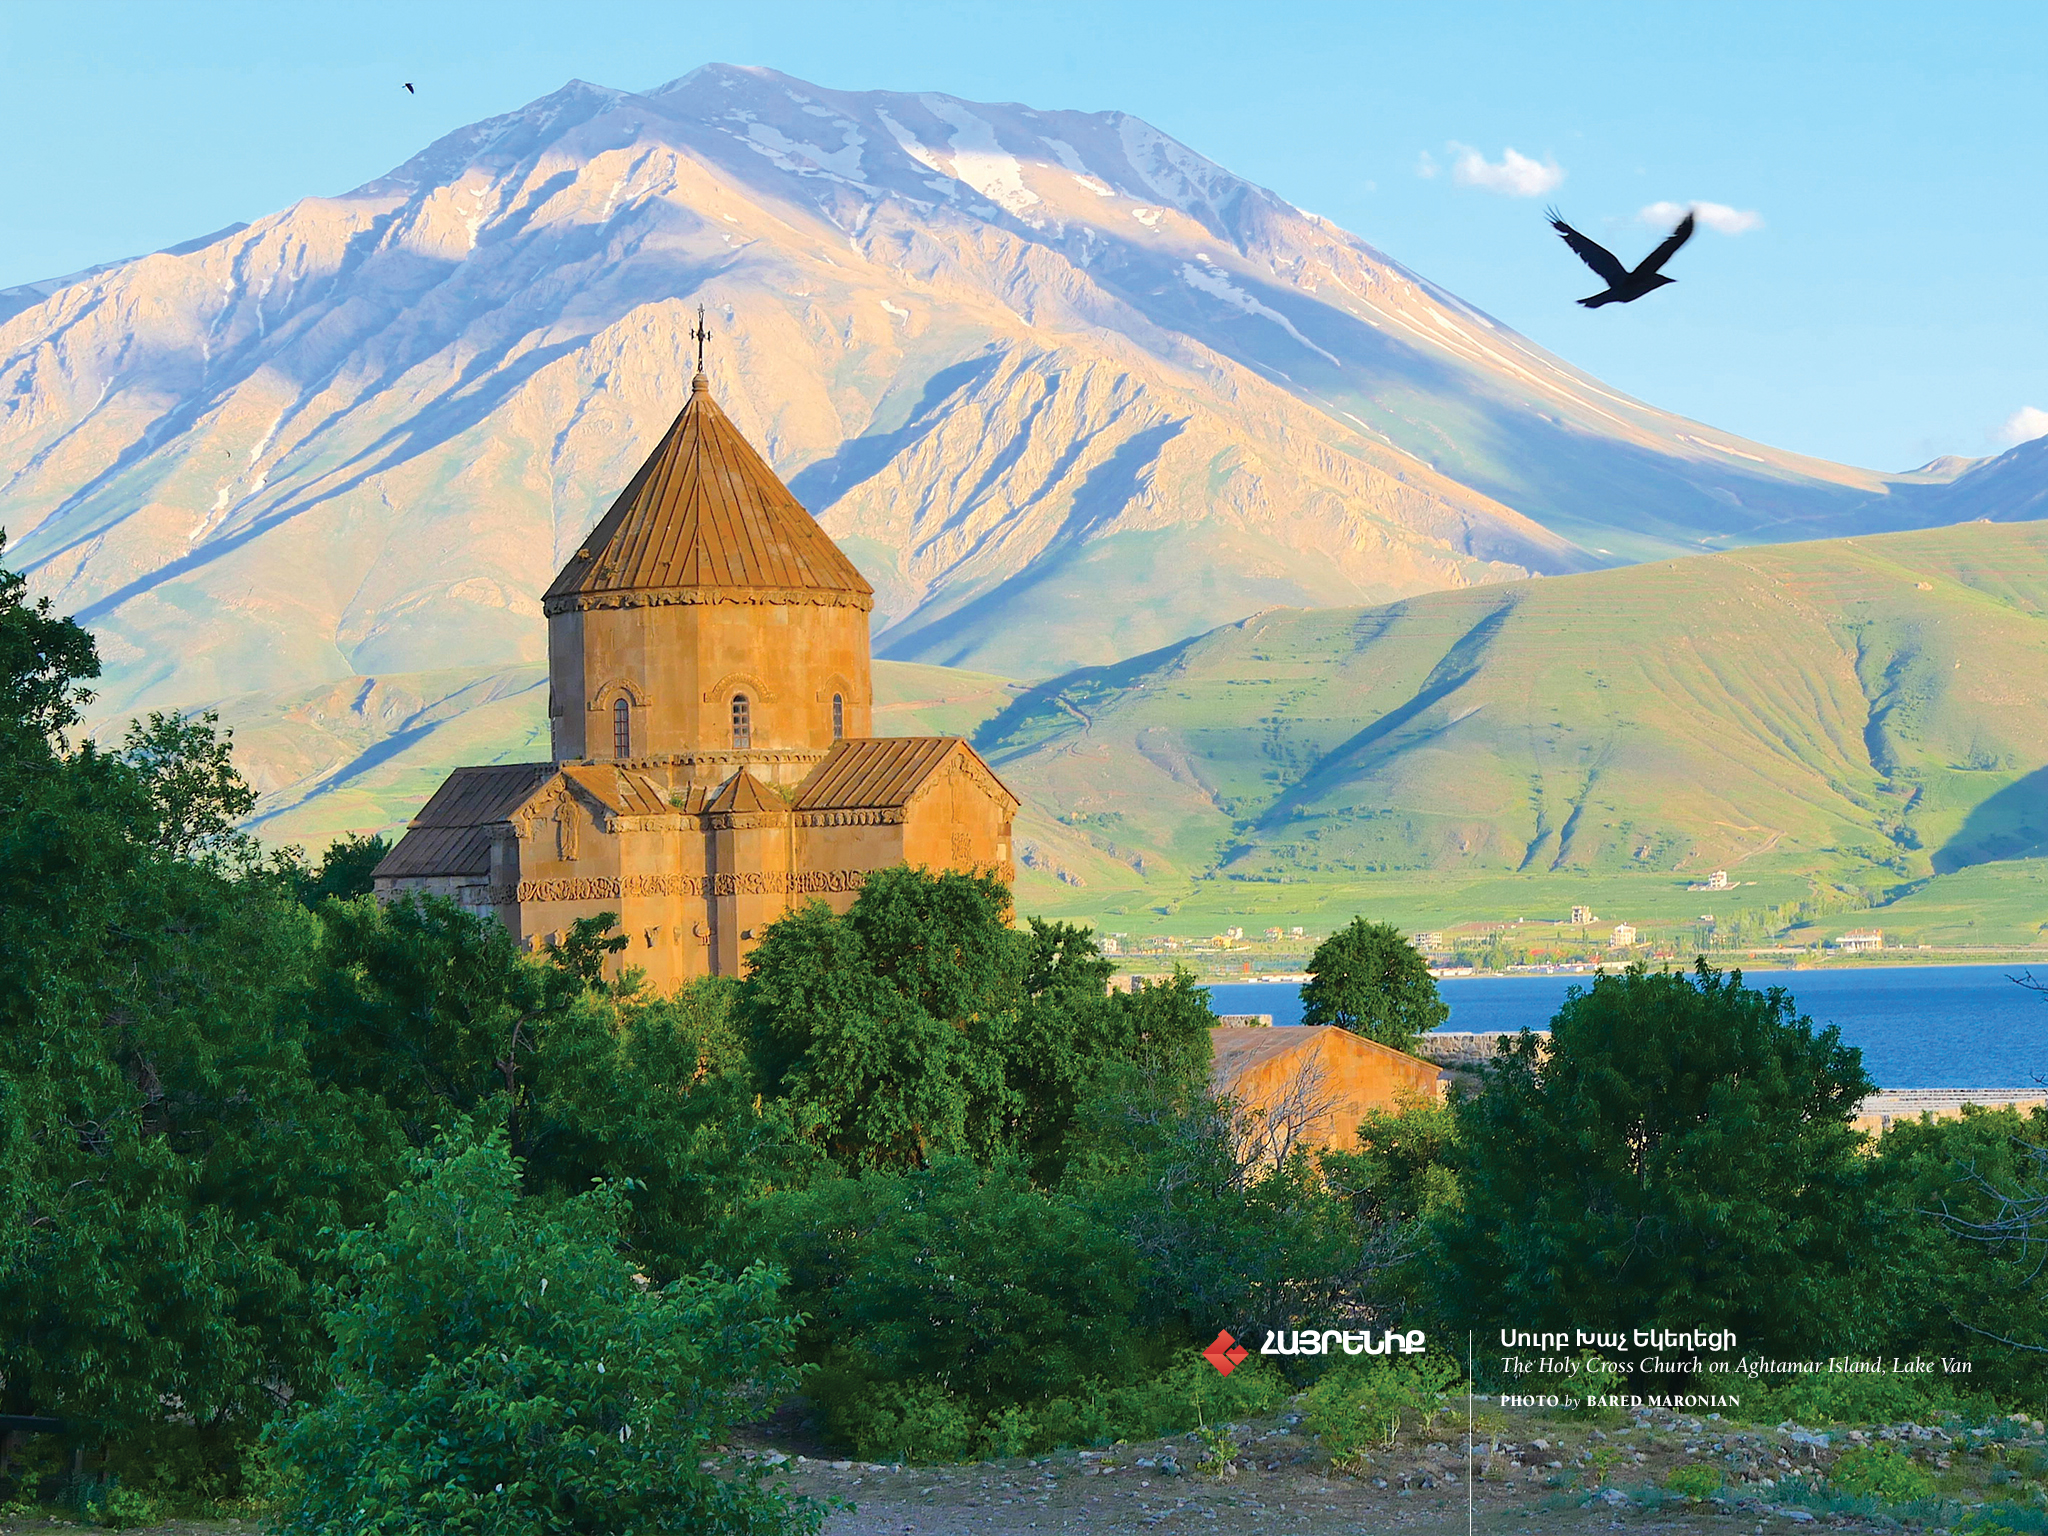 Armenia Wallpapers